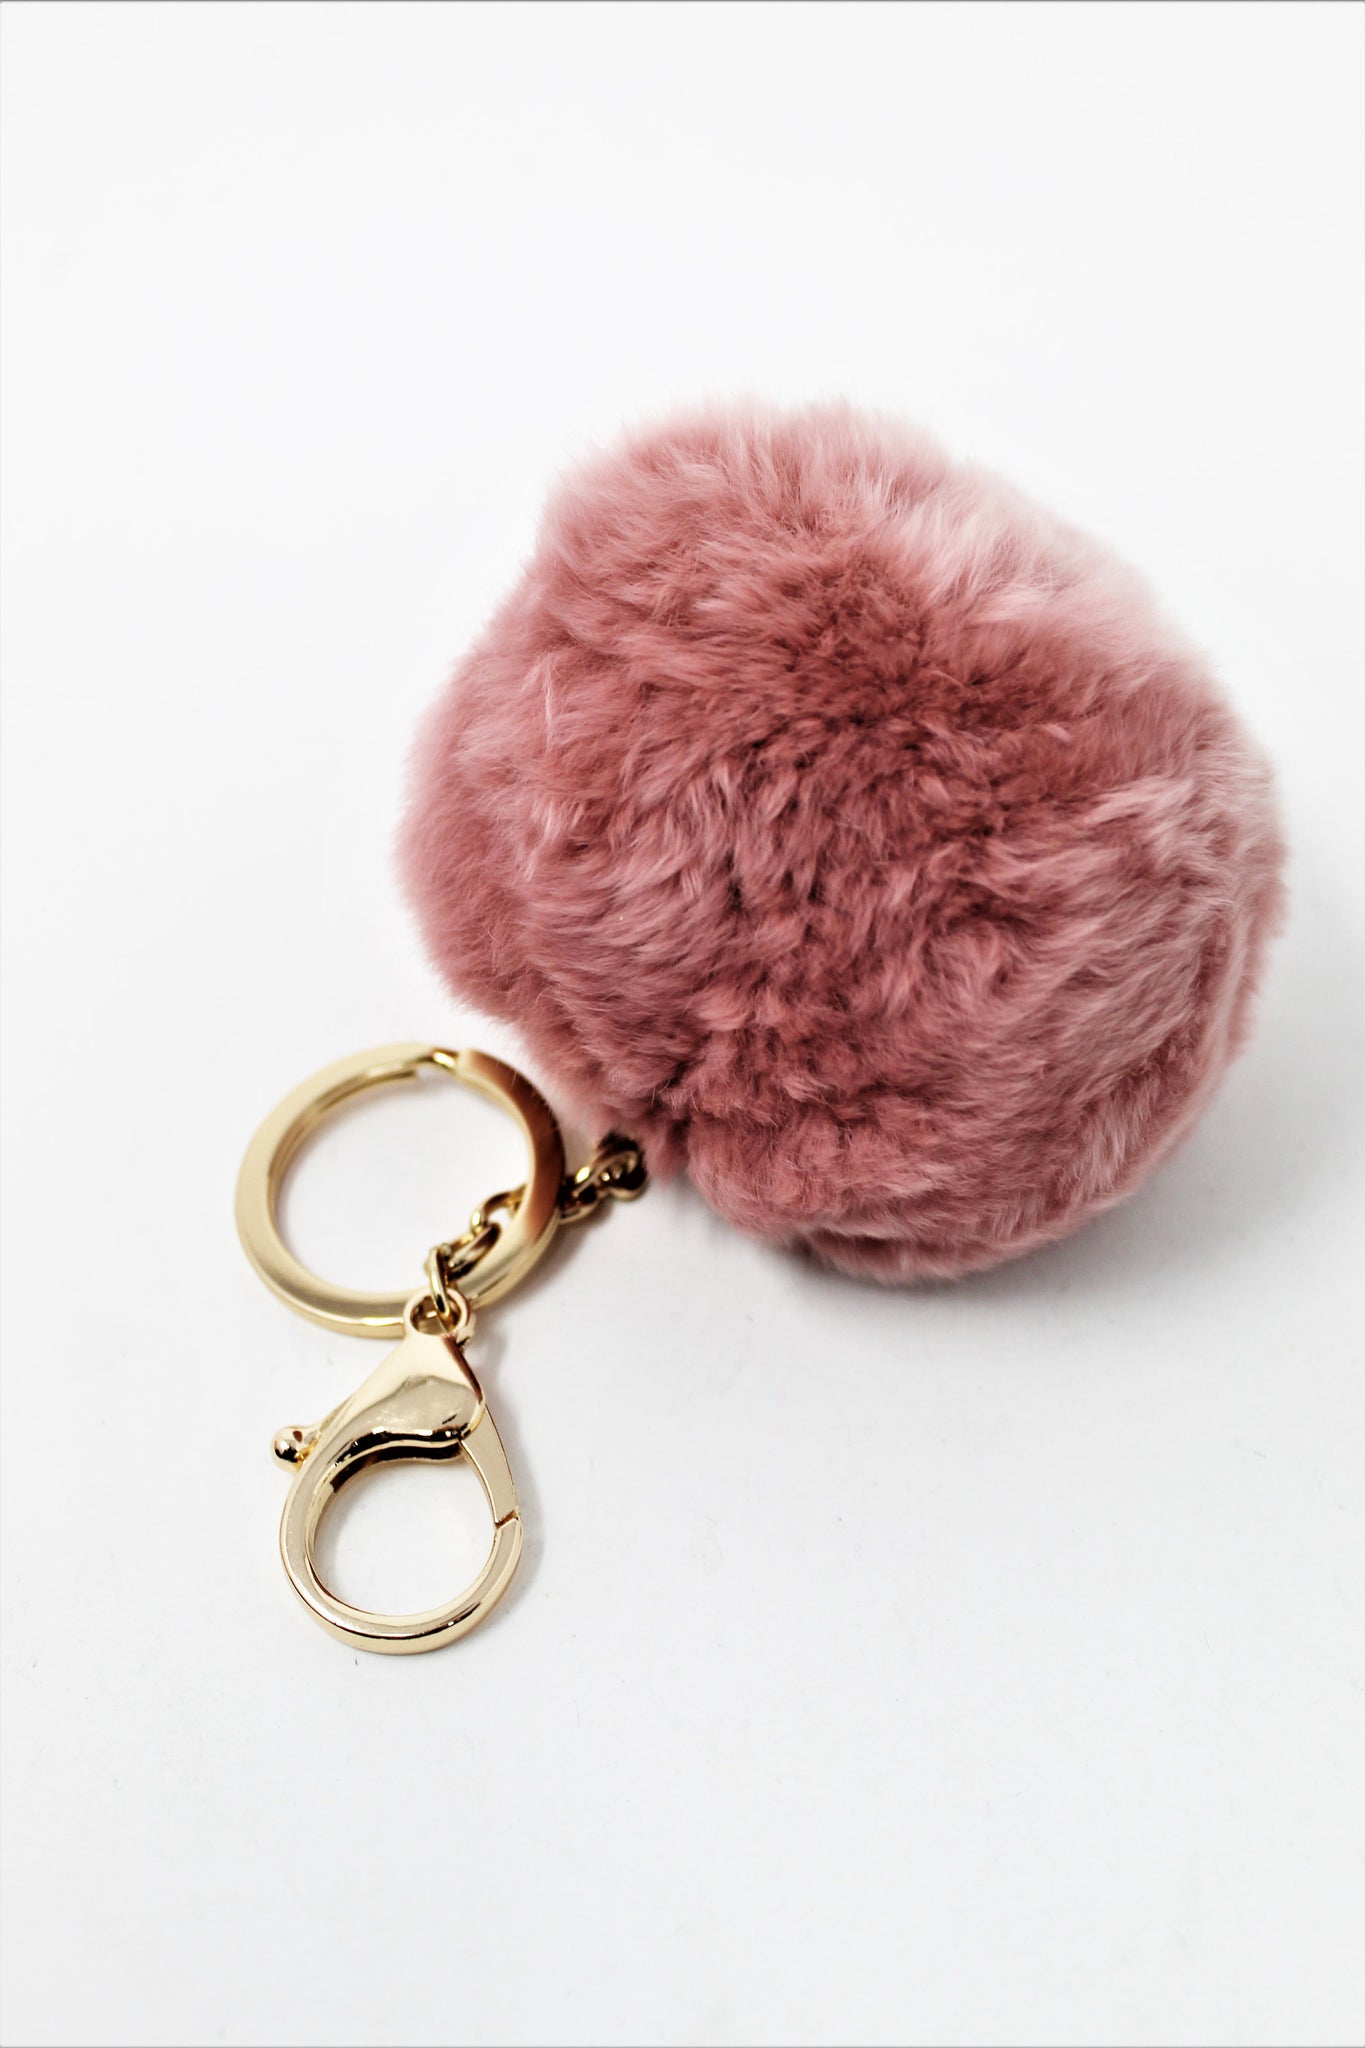 Naierhg Women Fashion Angel Fur Ball Keychain Handbag Key Ring Car Key Chain